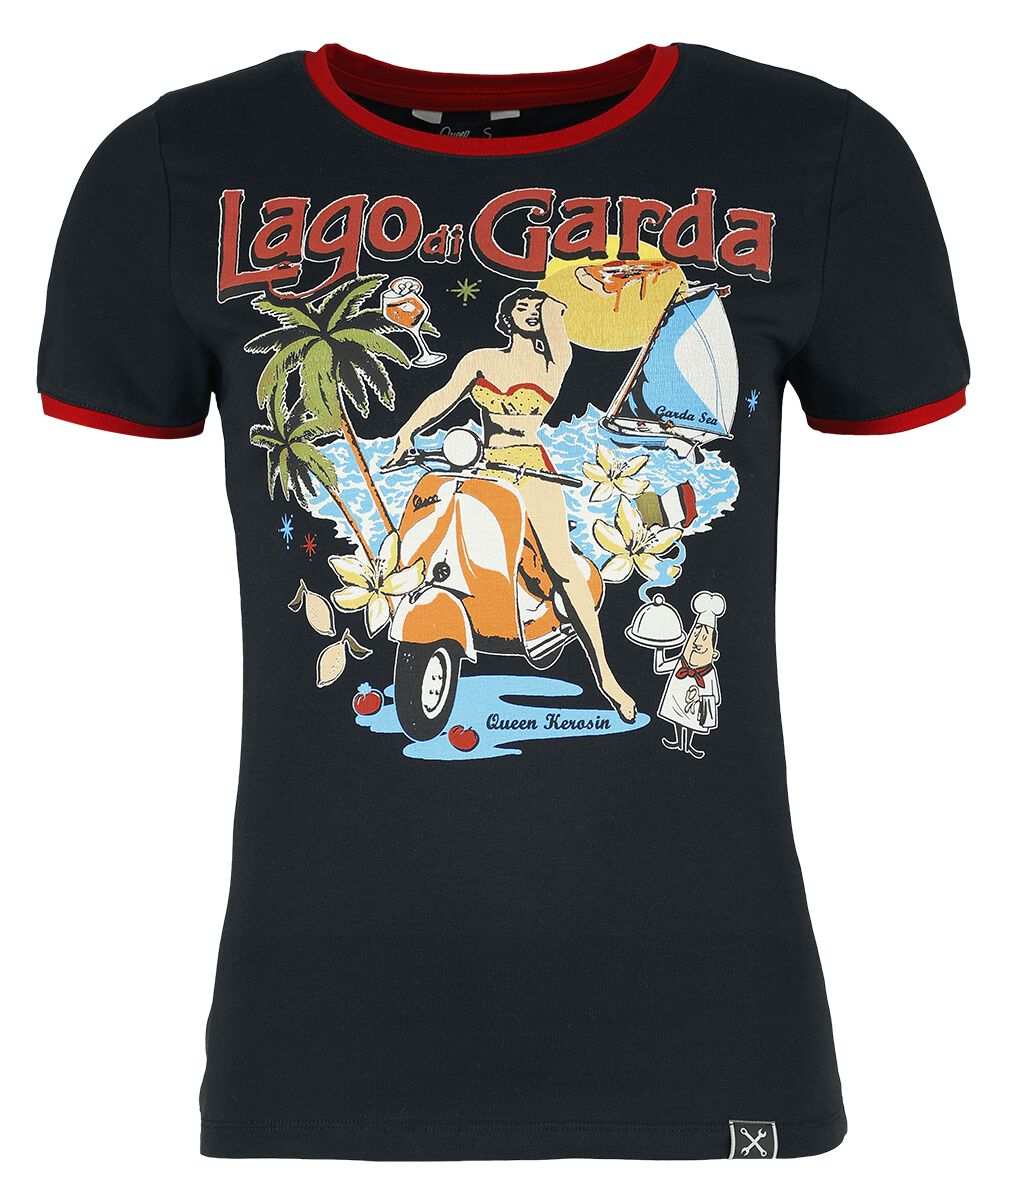 Queen Kerosin Lago Di Garda T-Shirt schwarz rot in XL